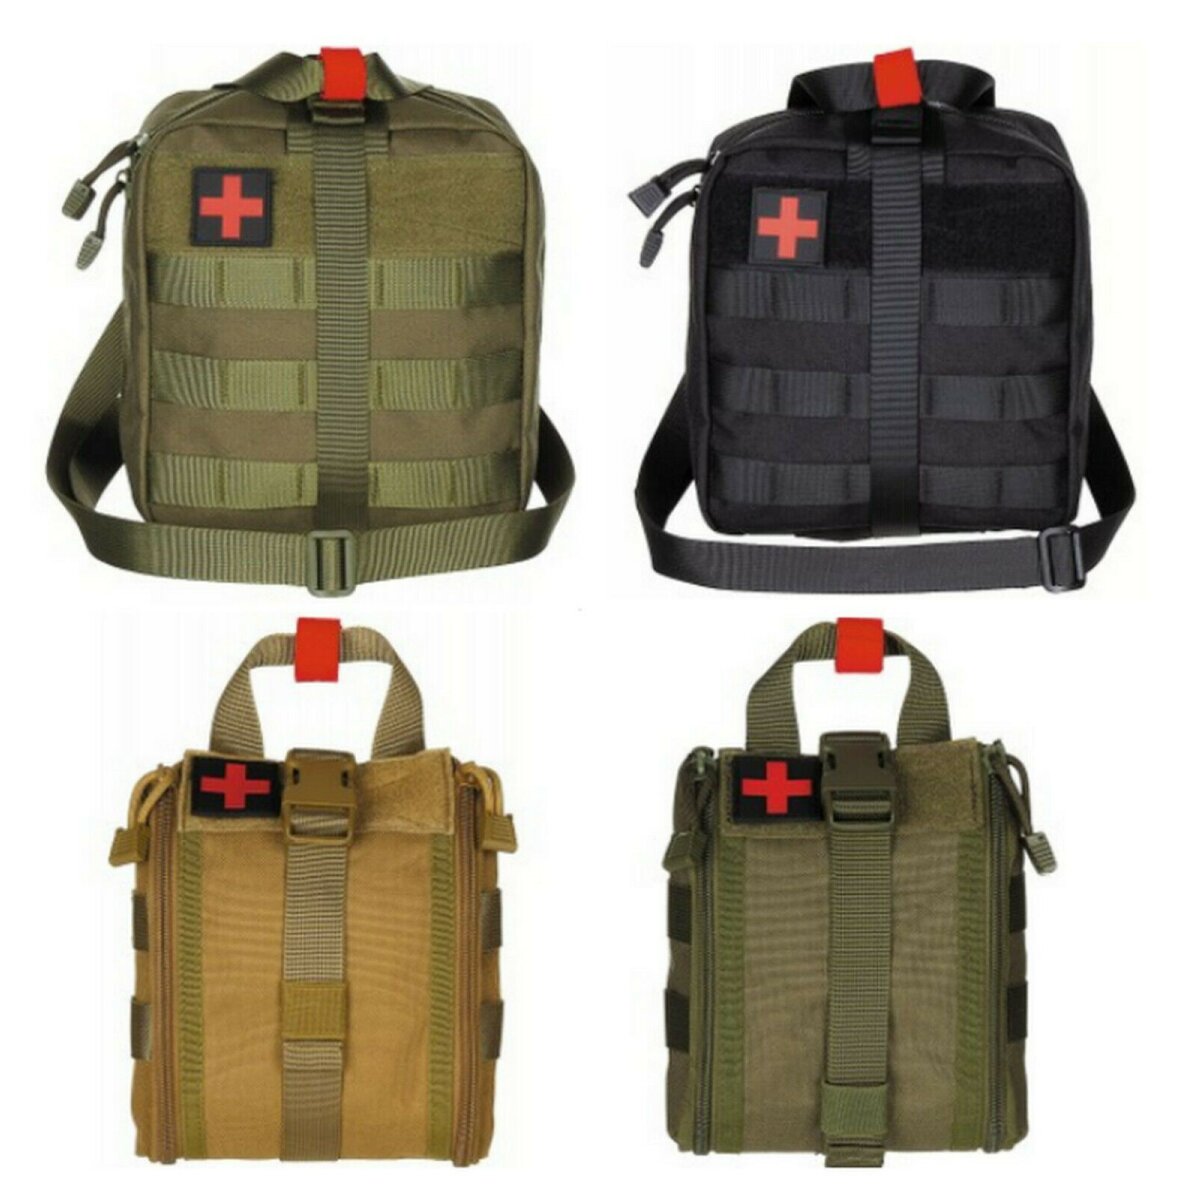 https://soeldner-messer.com/media/image/product/1748/lg/mfh-molle-tasche-erste-hilfe-first-aid-tactical-bag-2-groessen-versch-farben.jpg